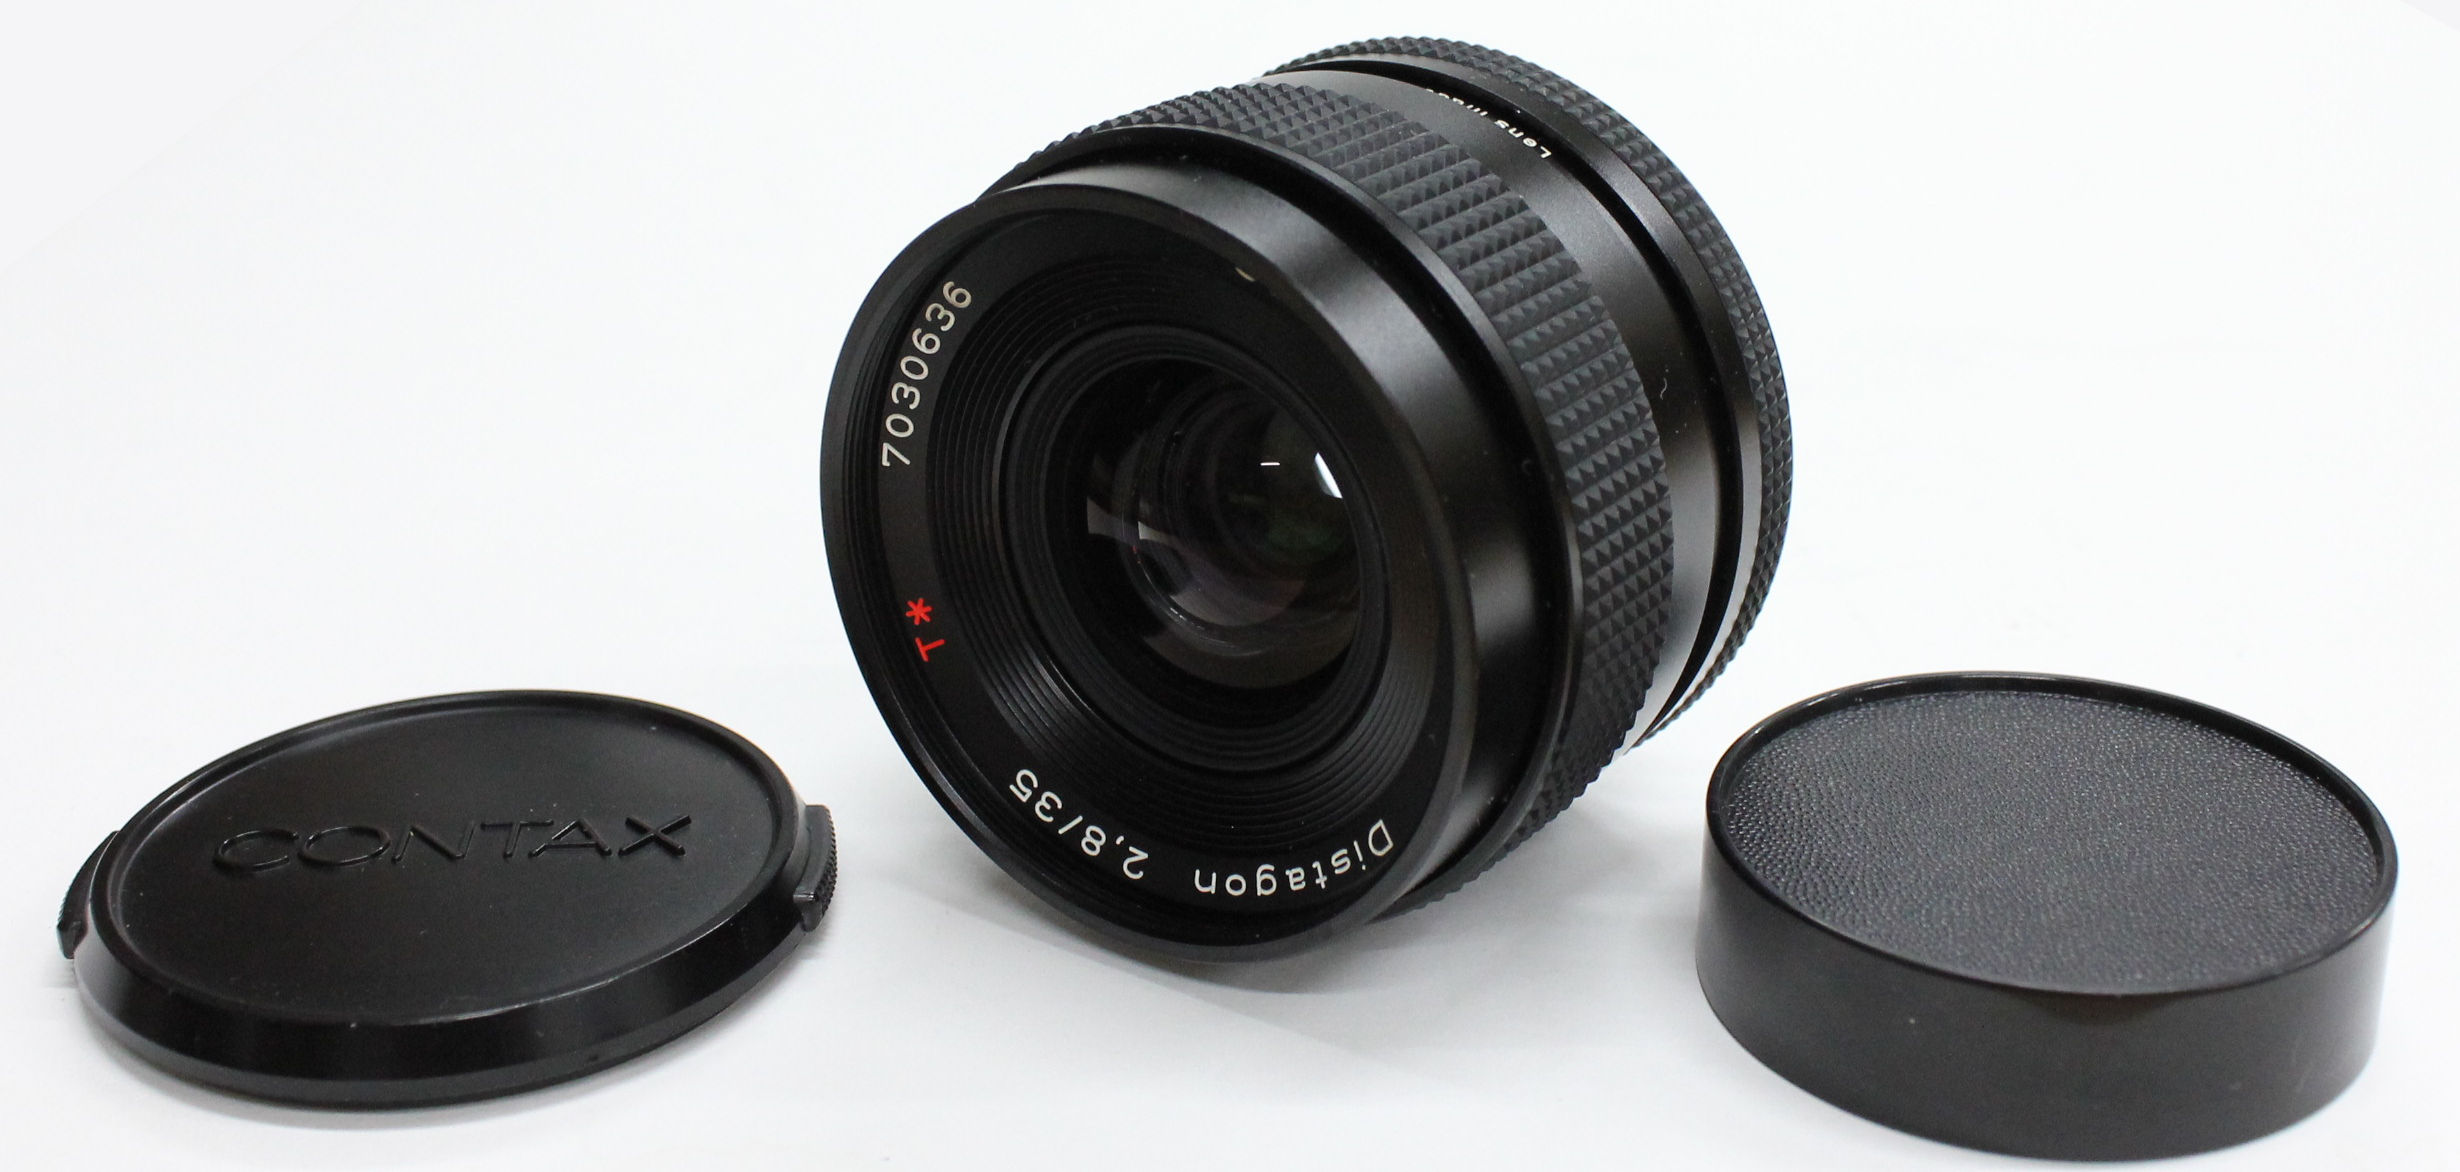 Japan Used Camera Shop | [NEAR MINT] Contax Carl Zeiss Distagon T* 35mm F2.8 MMJ MF Lens from JAPAN